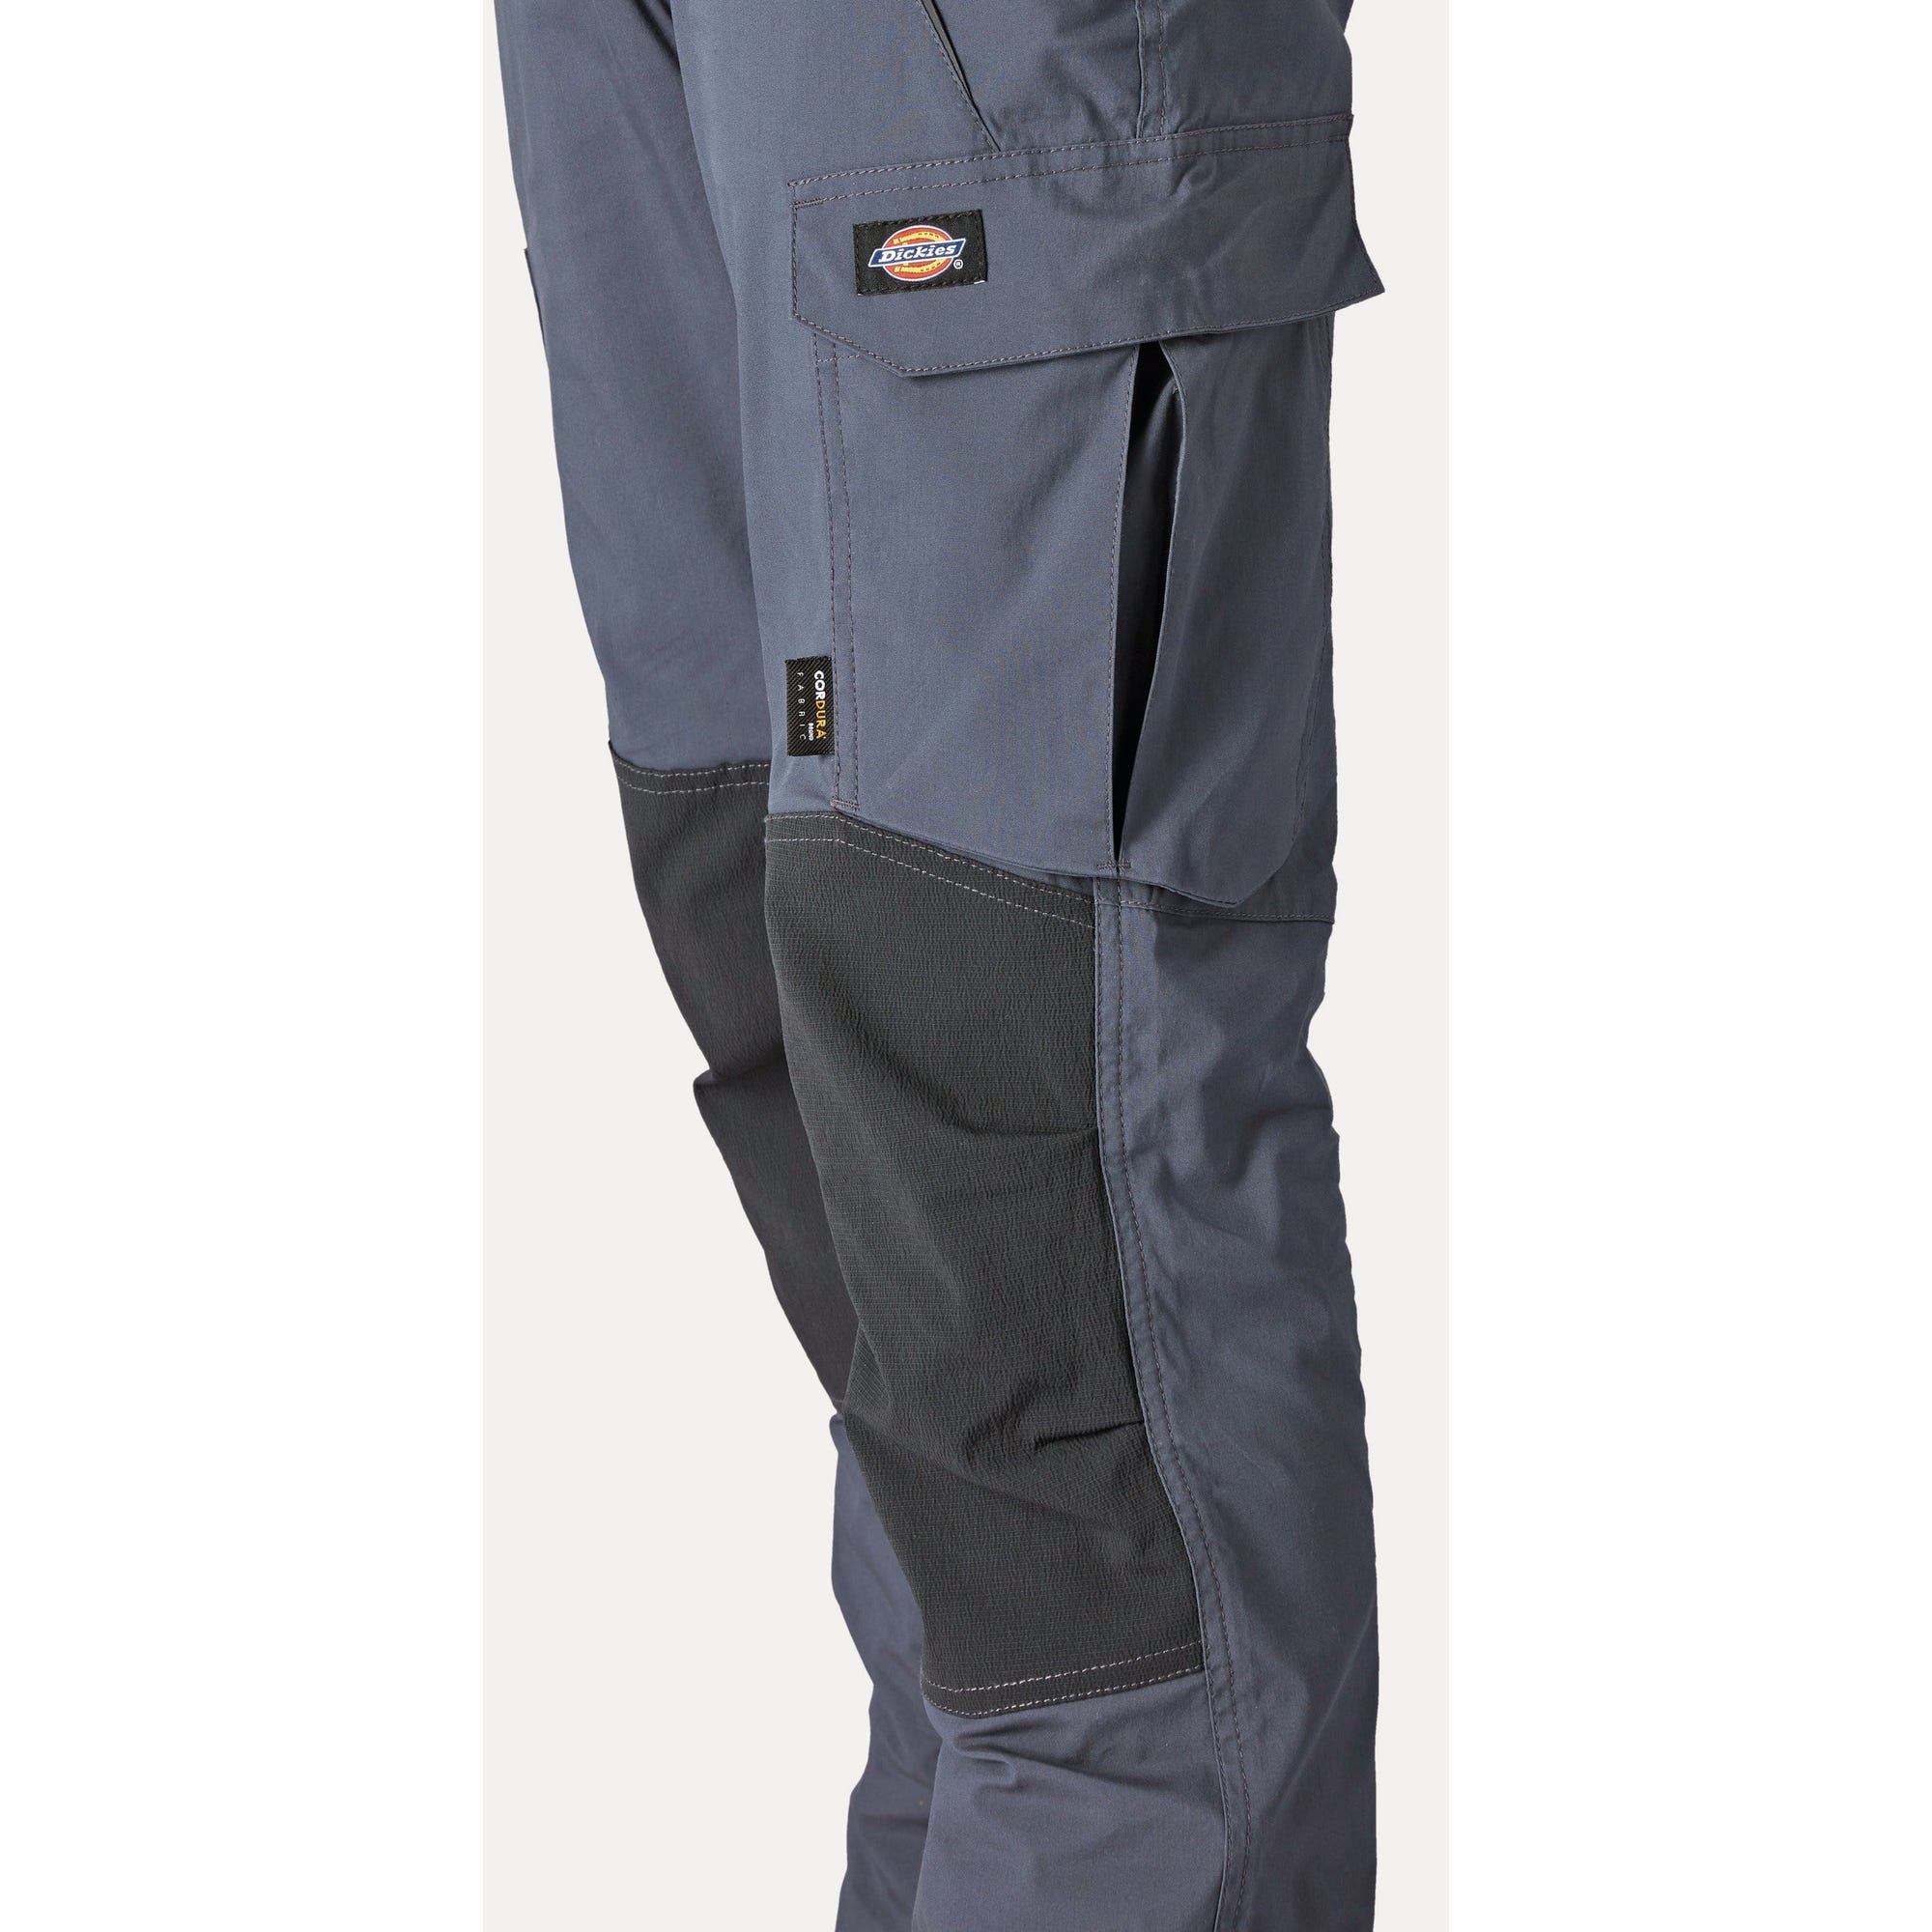 Pantalon léger Flex Noir - Dickies - Taille 46 8